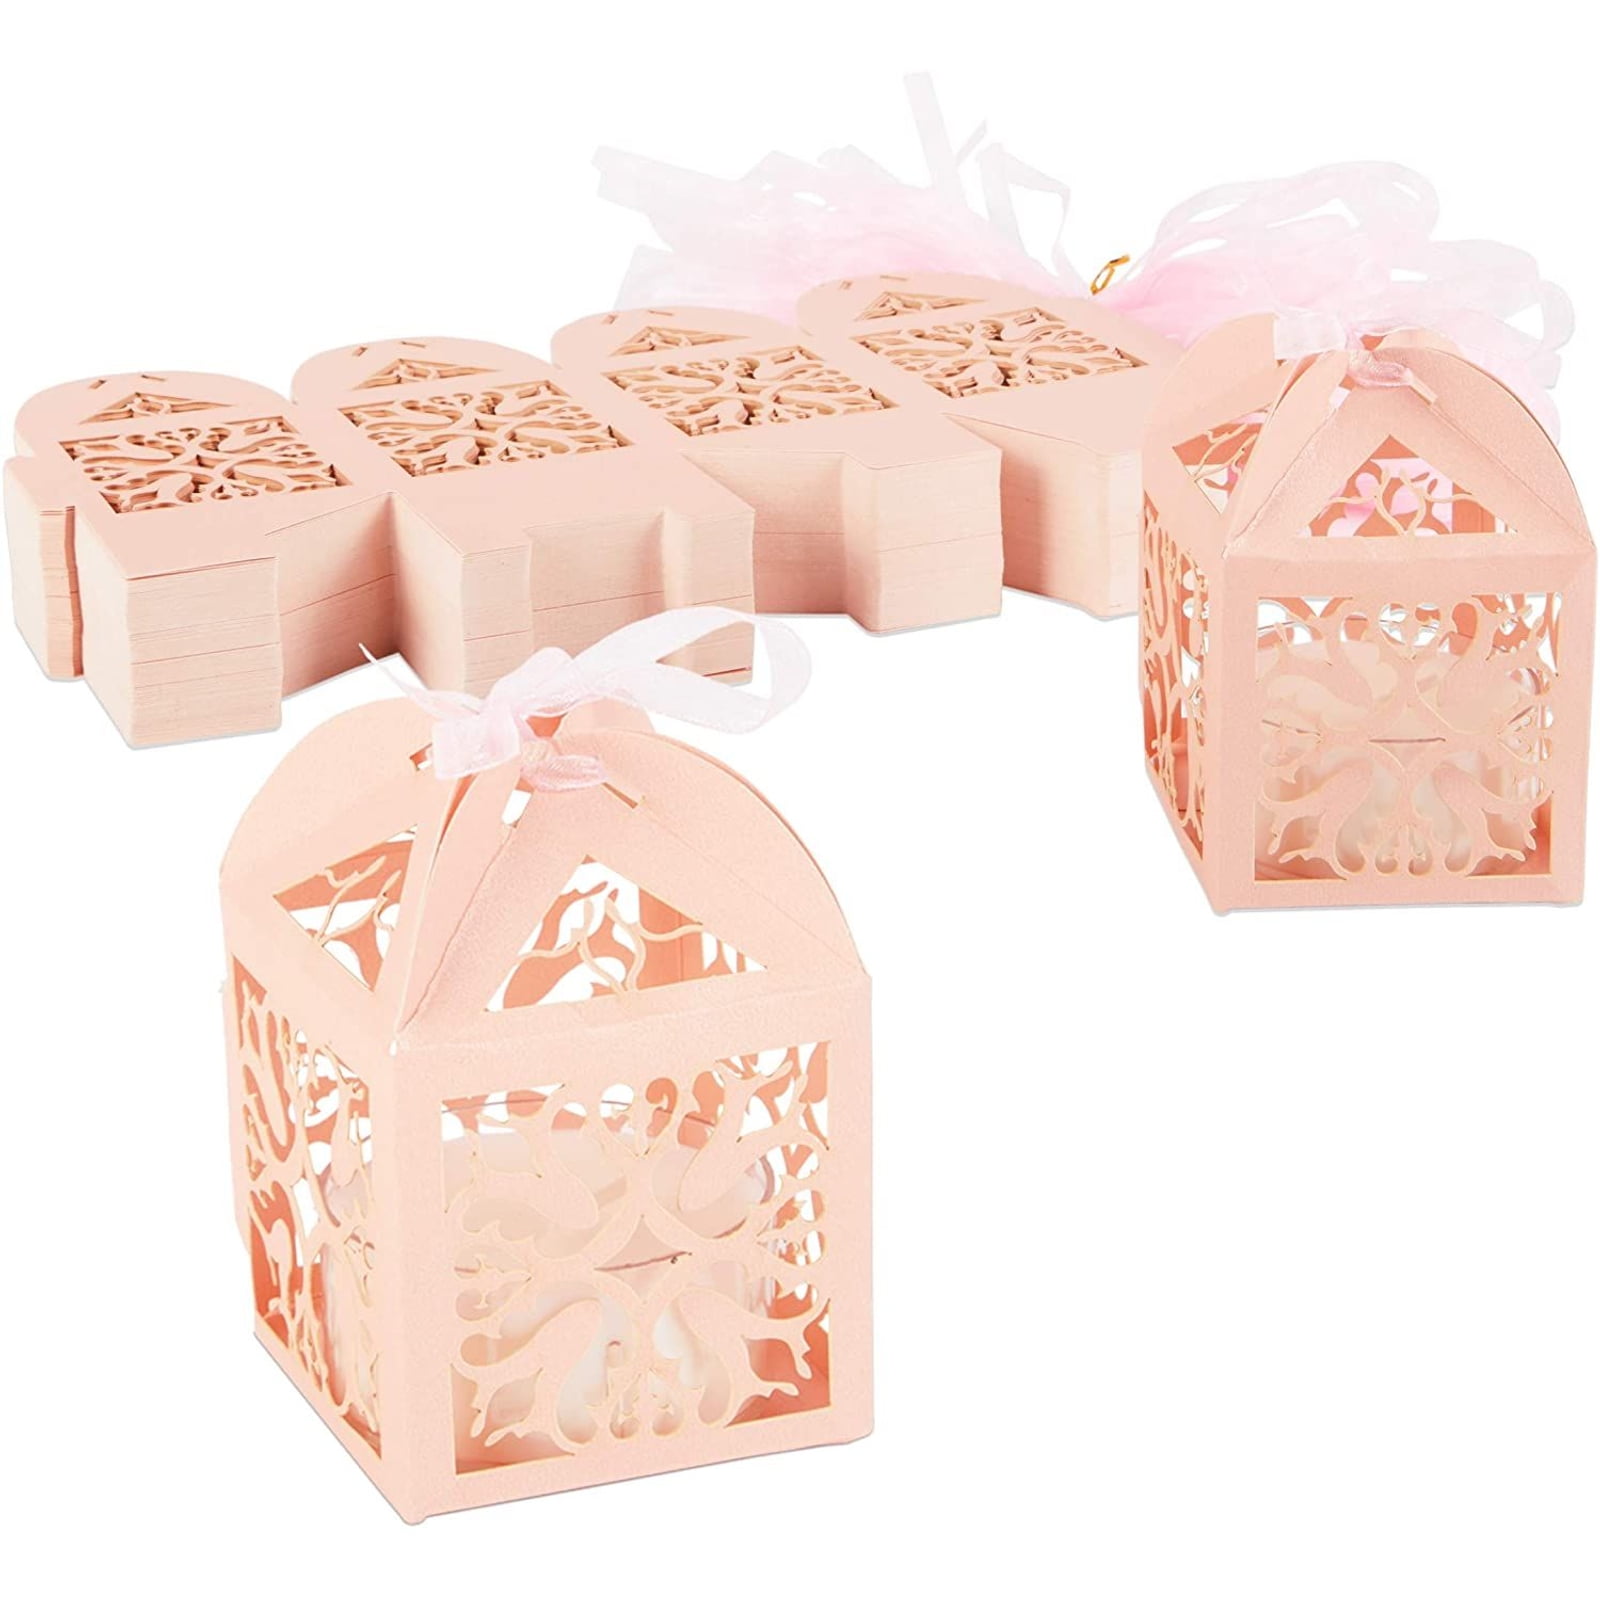 100 pcs Elegant Laser Cut Sweets Cake Candy Gift Favour Favor Boxes Love #2 